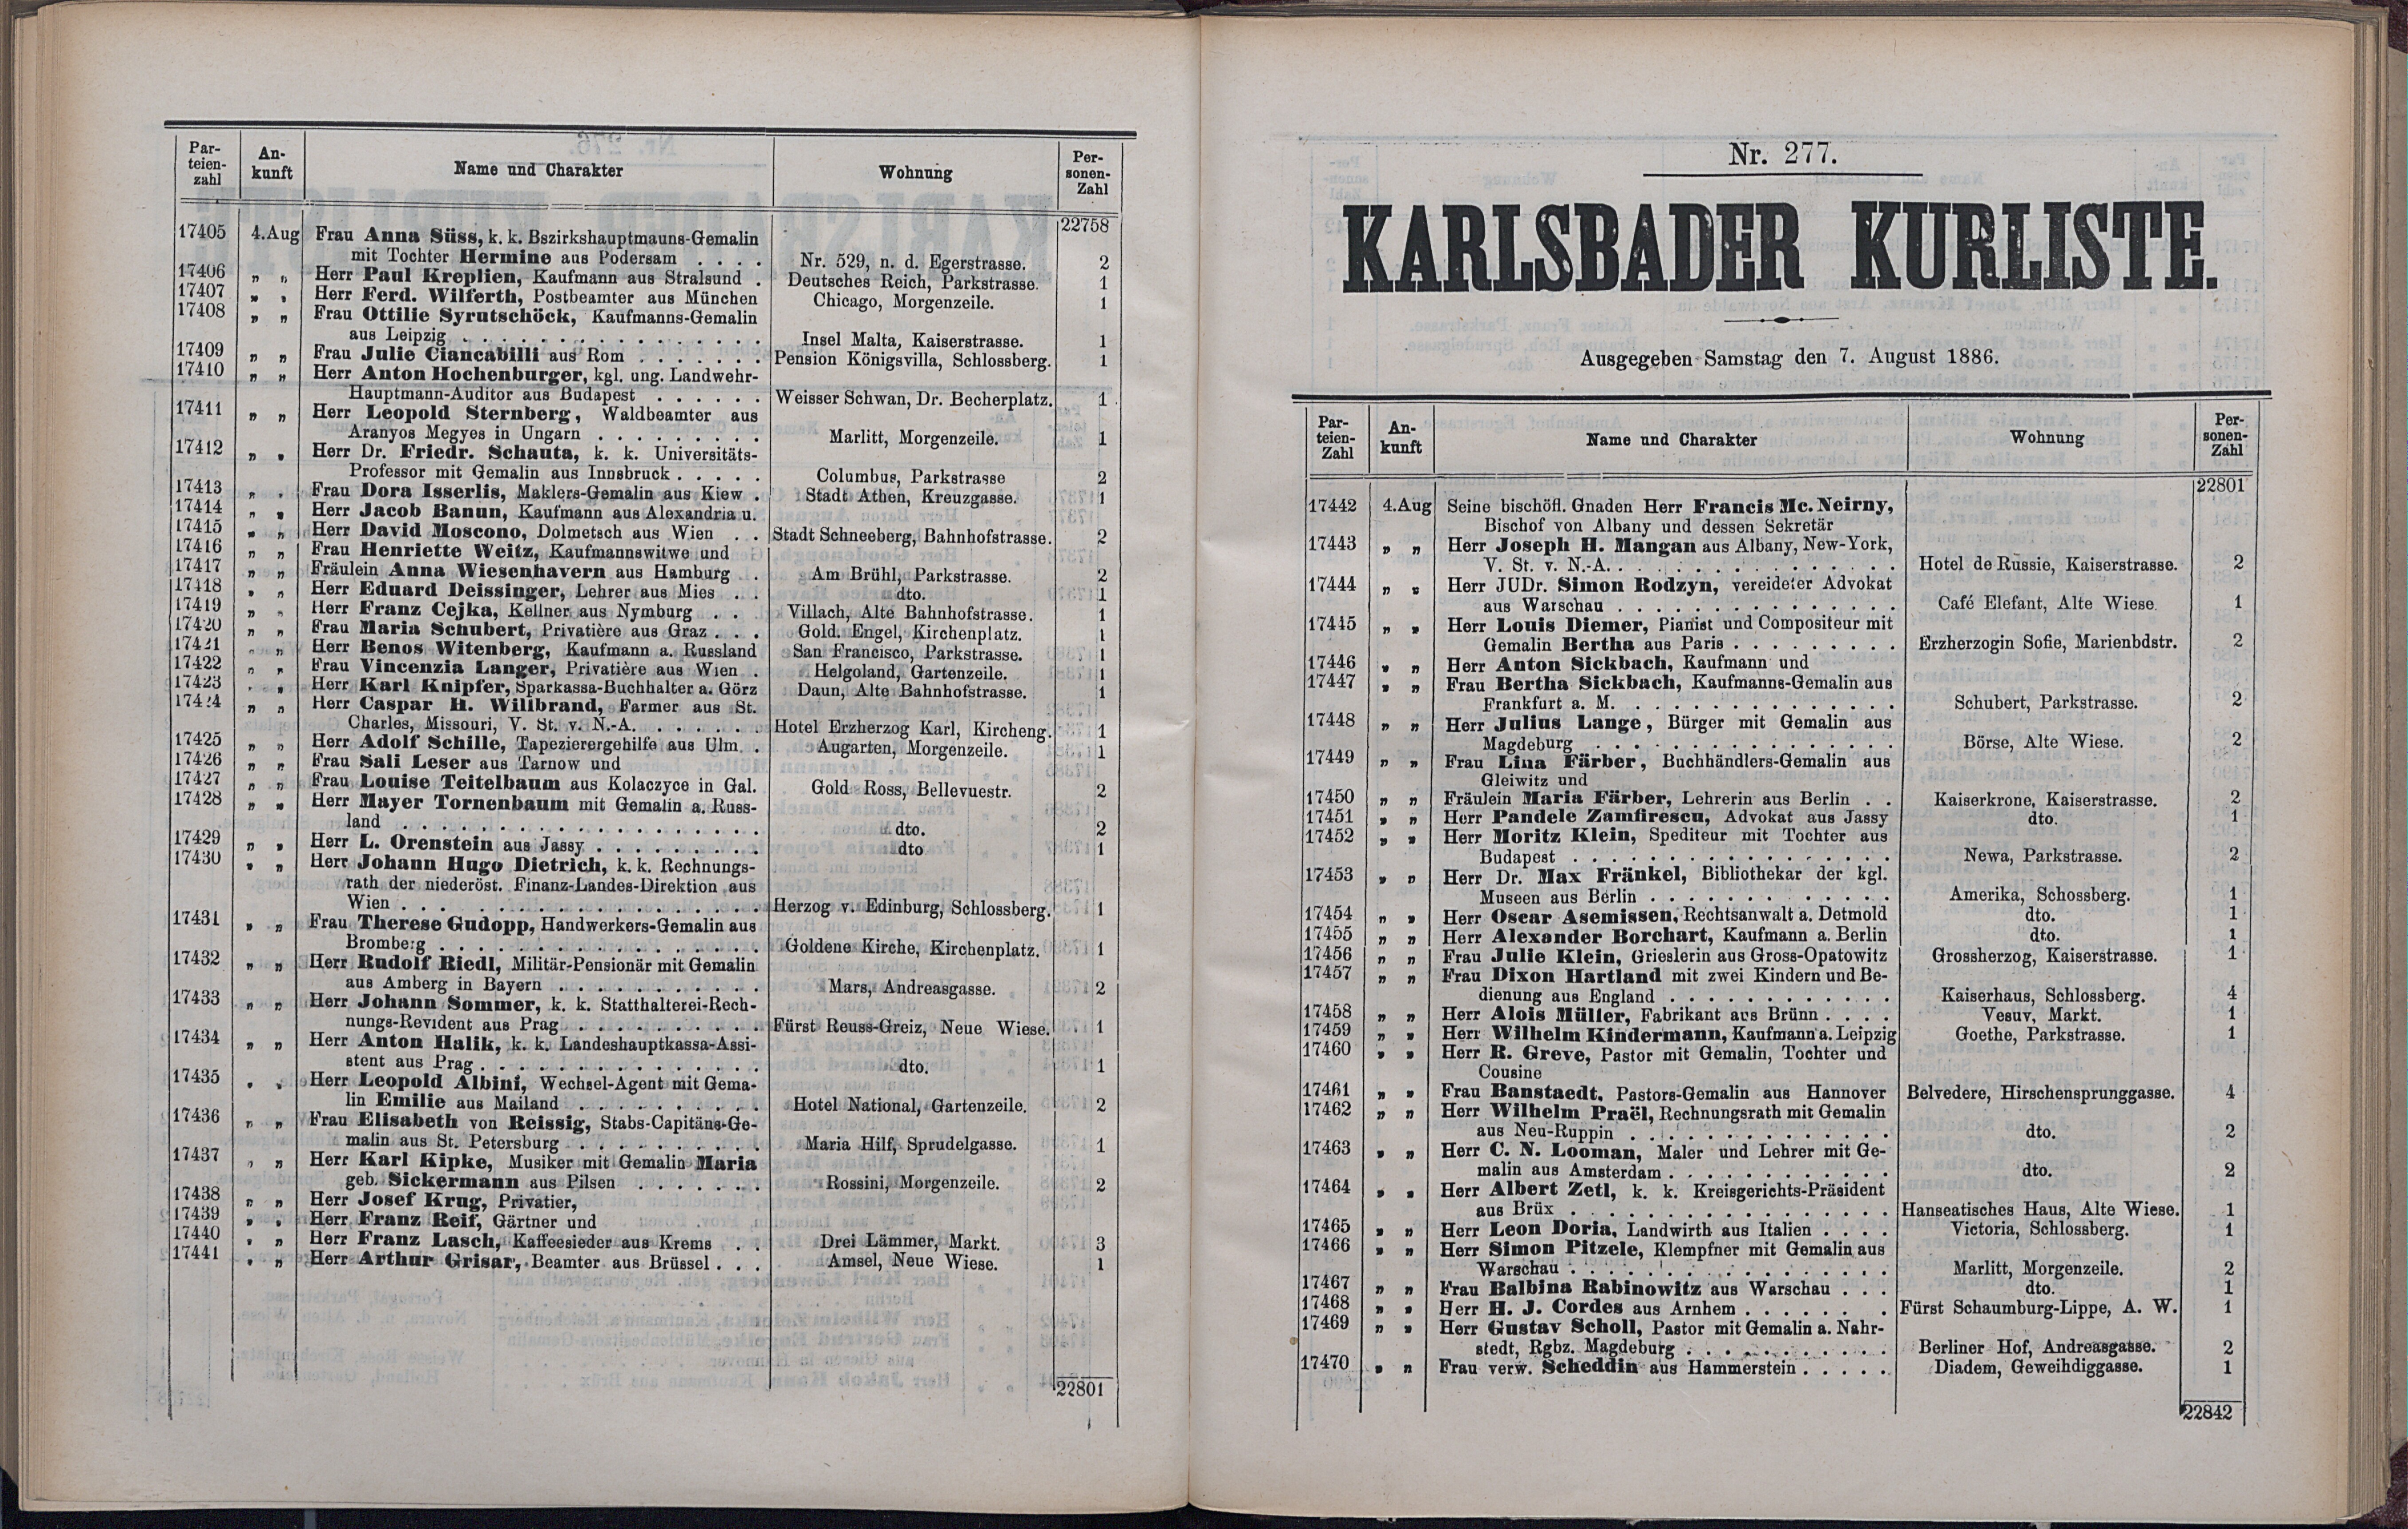 331. soap-kv_knihovna_karlsbader-kurliste-1886_3320